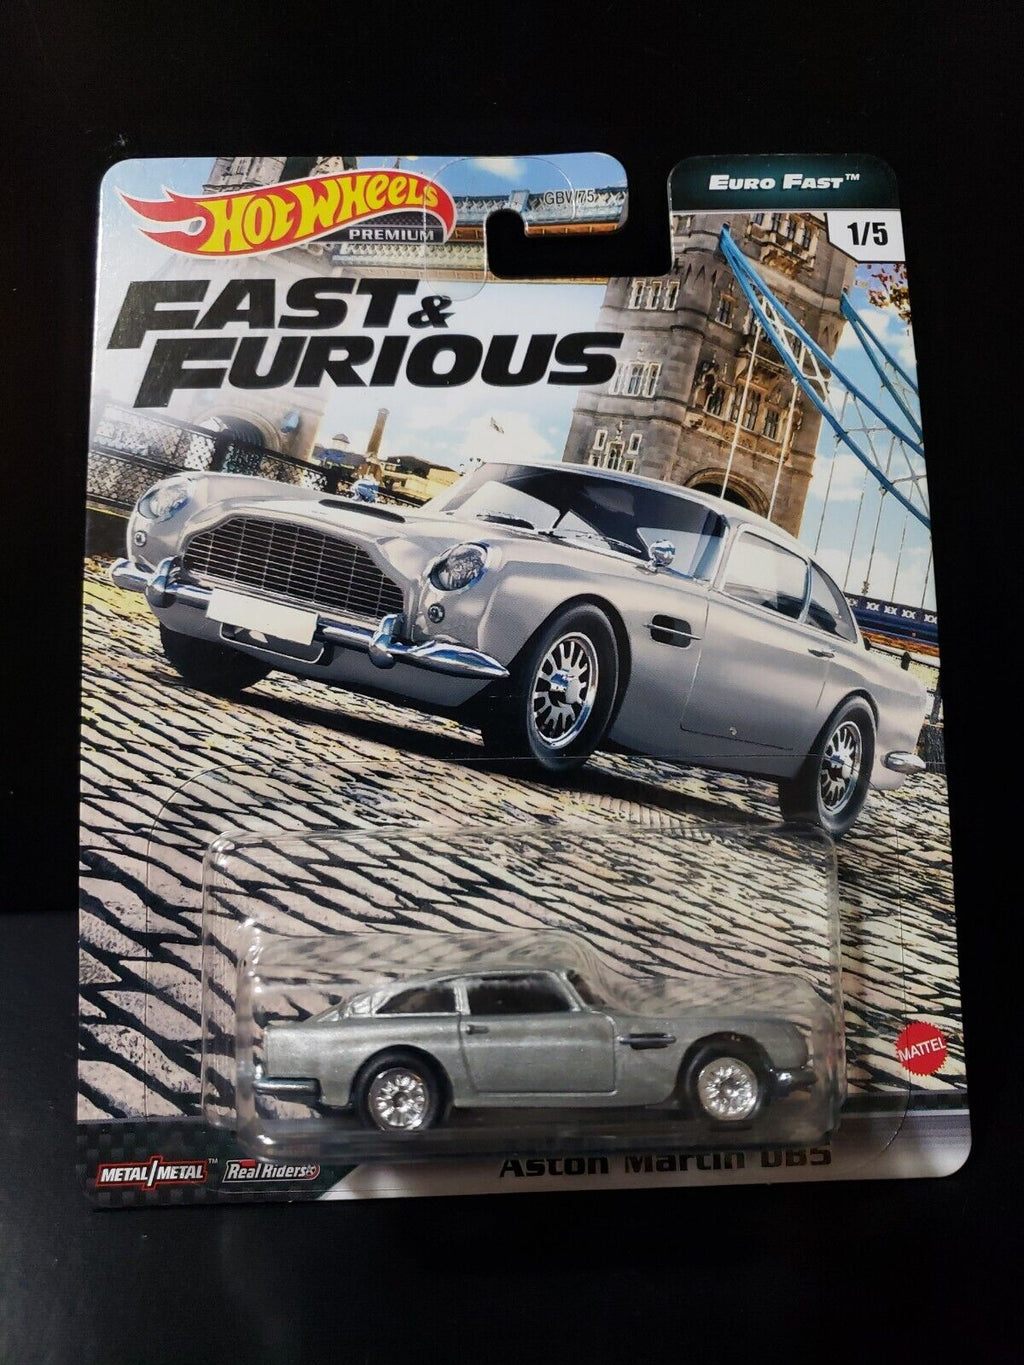 Hot Wheels Fast & Furious Aston Martin DB5 Euro Fast 1/5 Real Riders James Bond